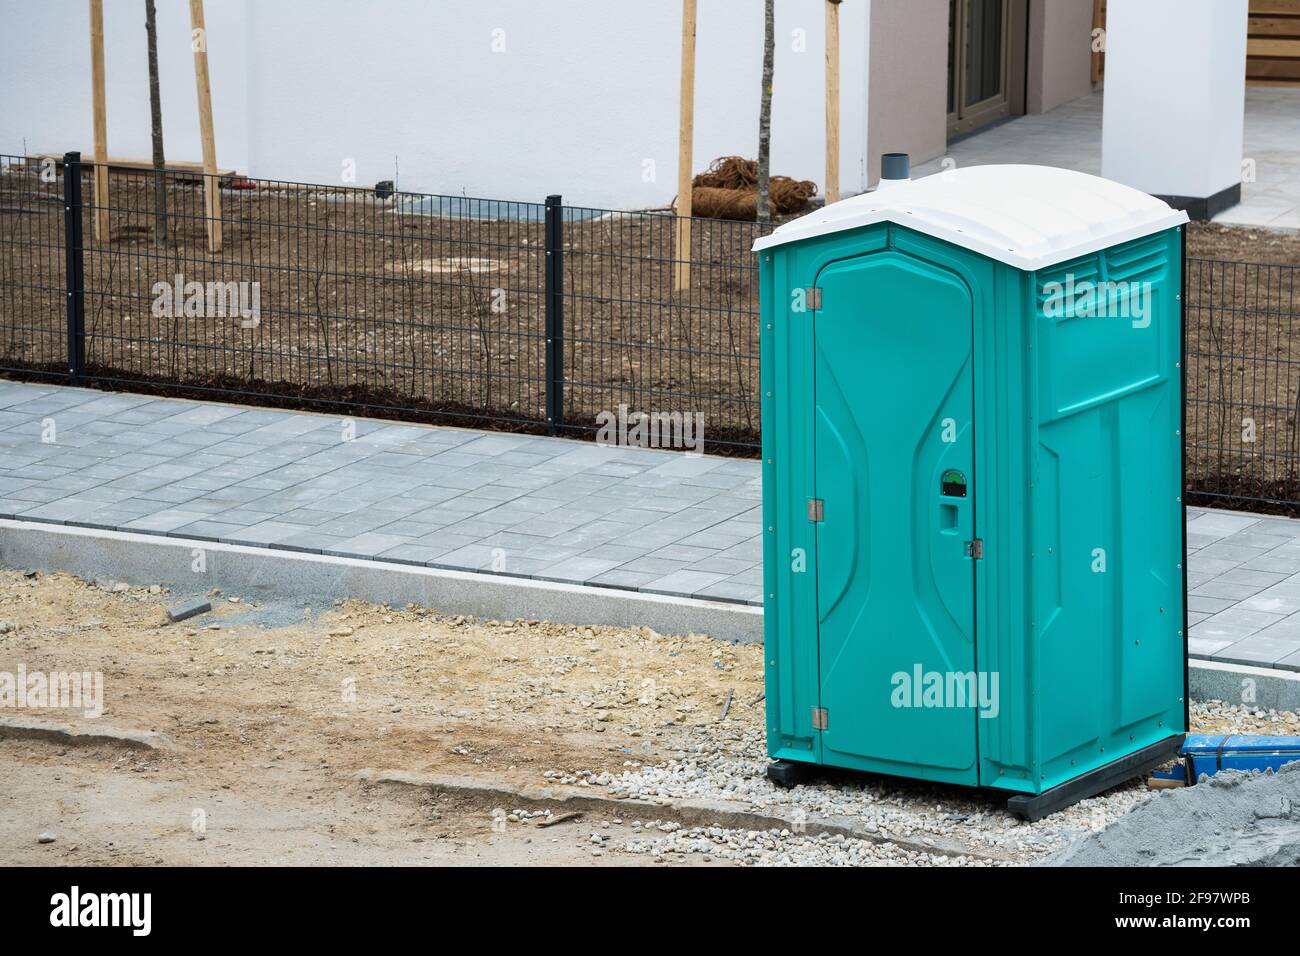 Mobile toilette -Fotos und -Bildmaterial in hoher Auflösung – Alamy